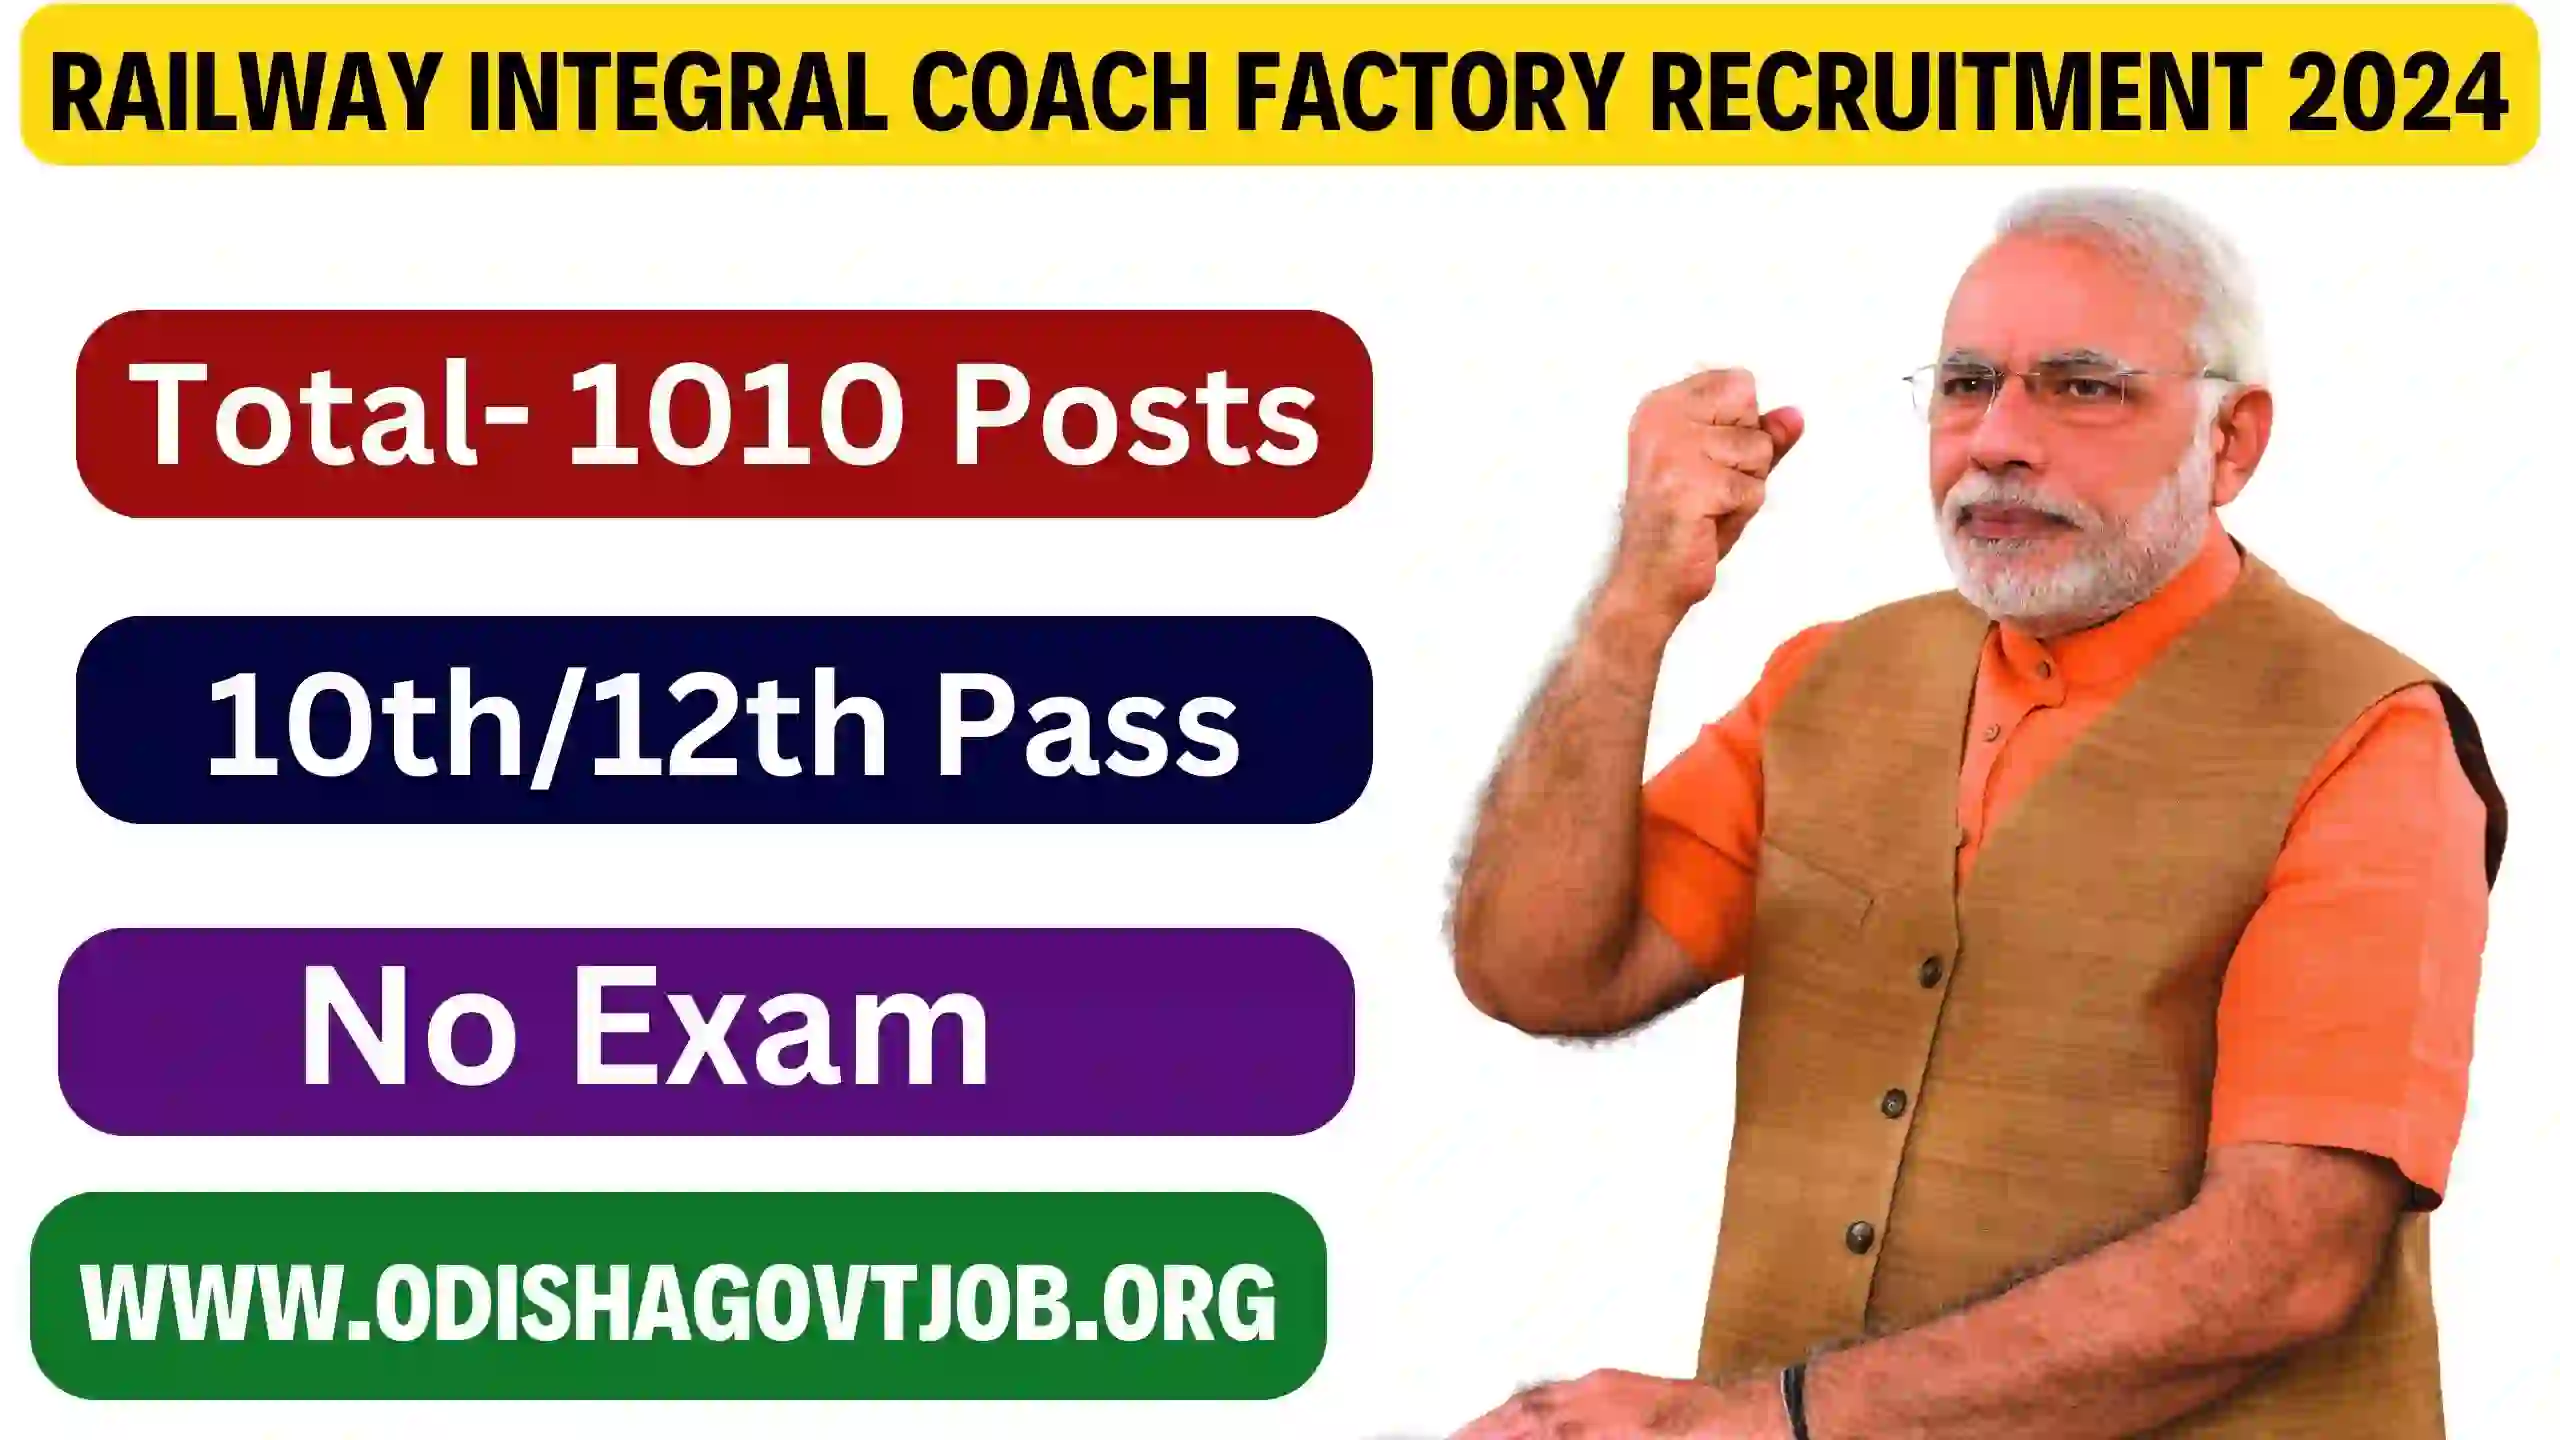 Railway Integral Coach Factory Recruitment 2024